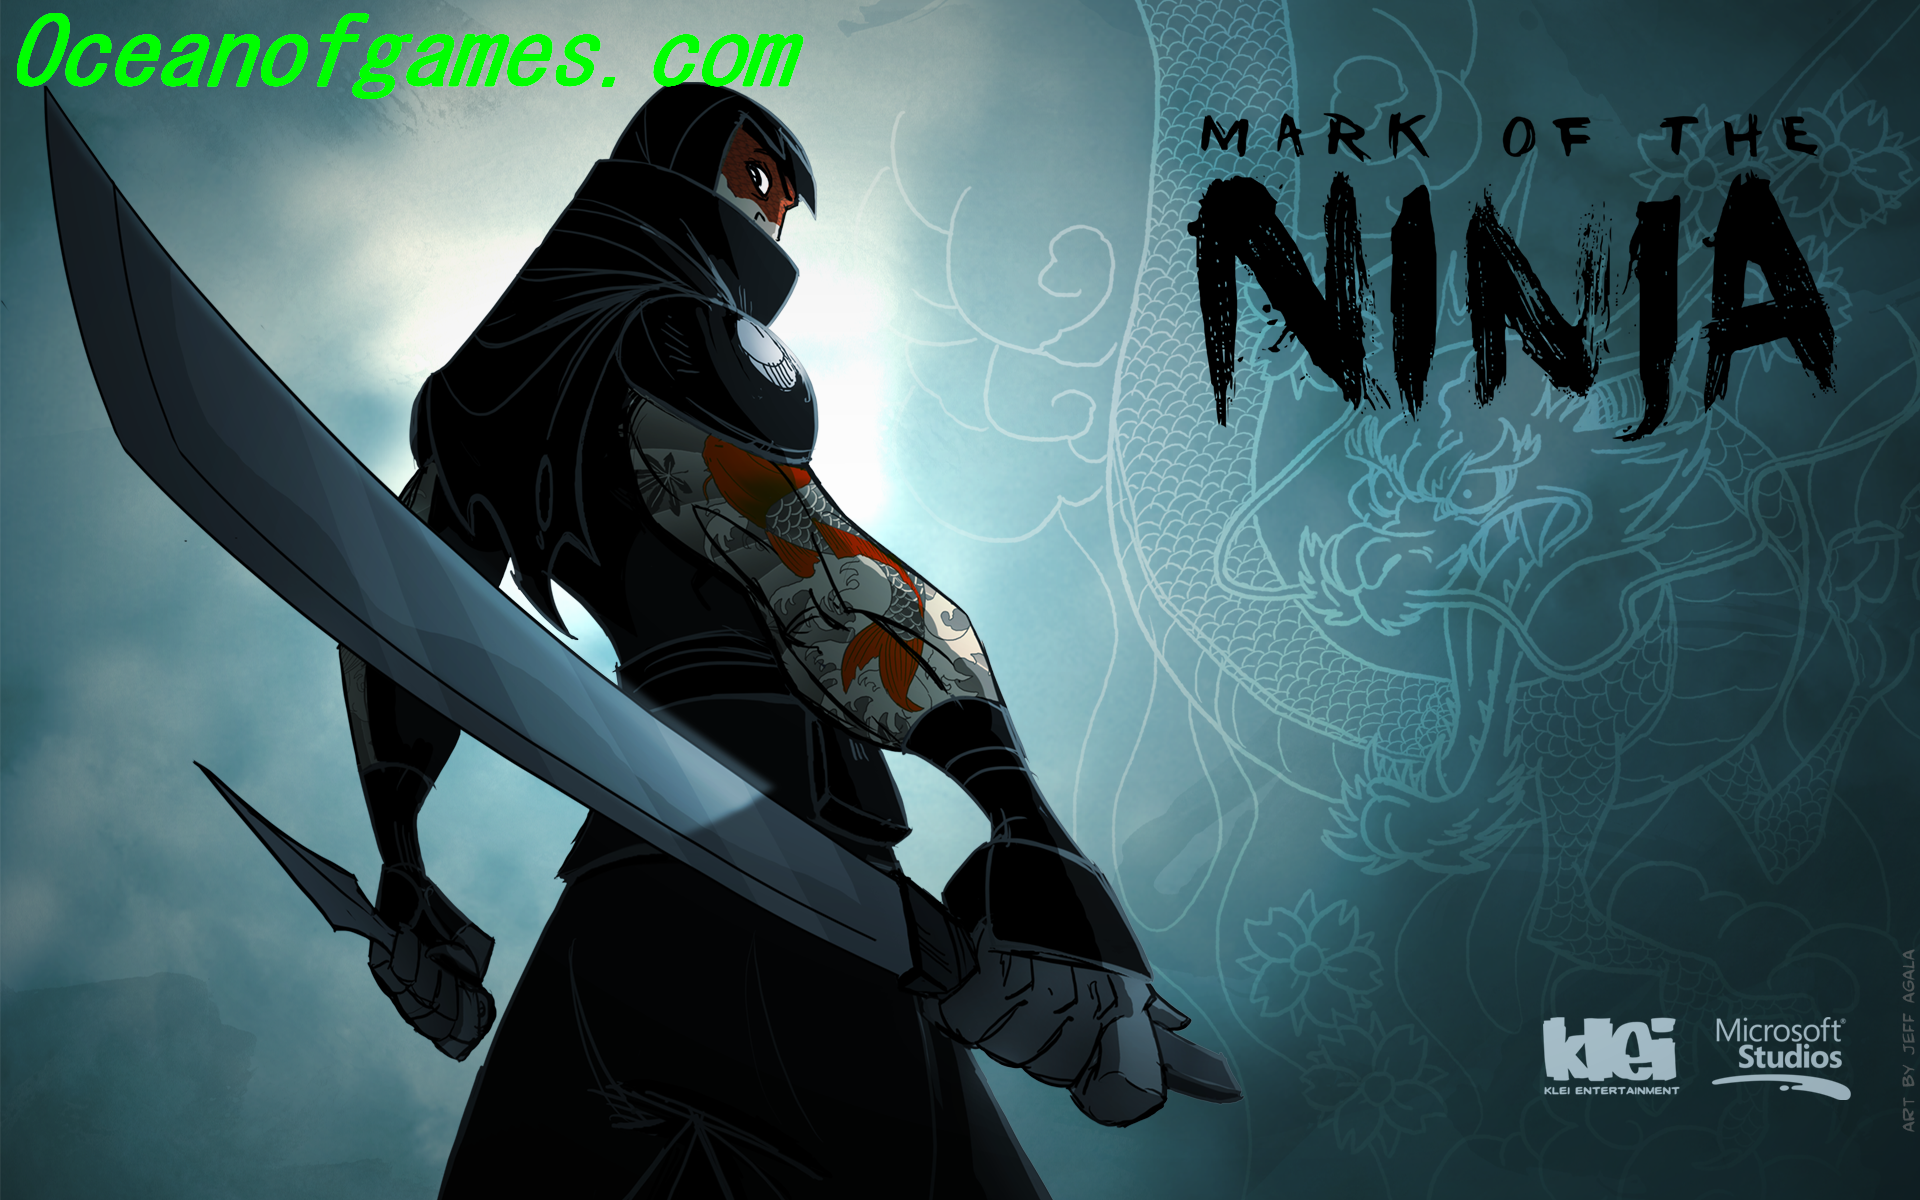 mark of the ninja steam download free